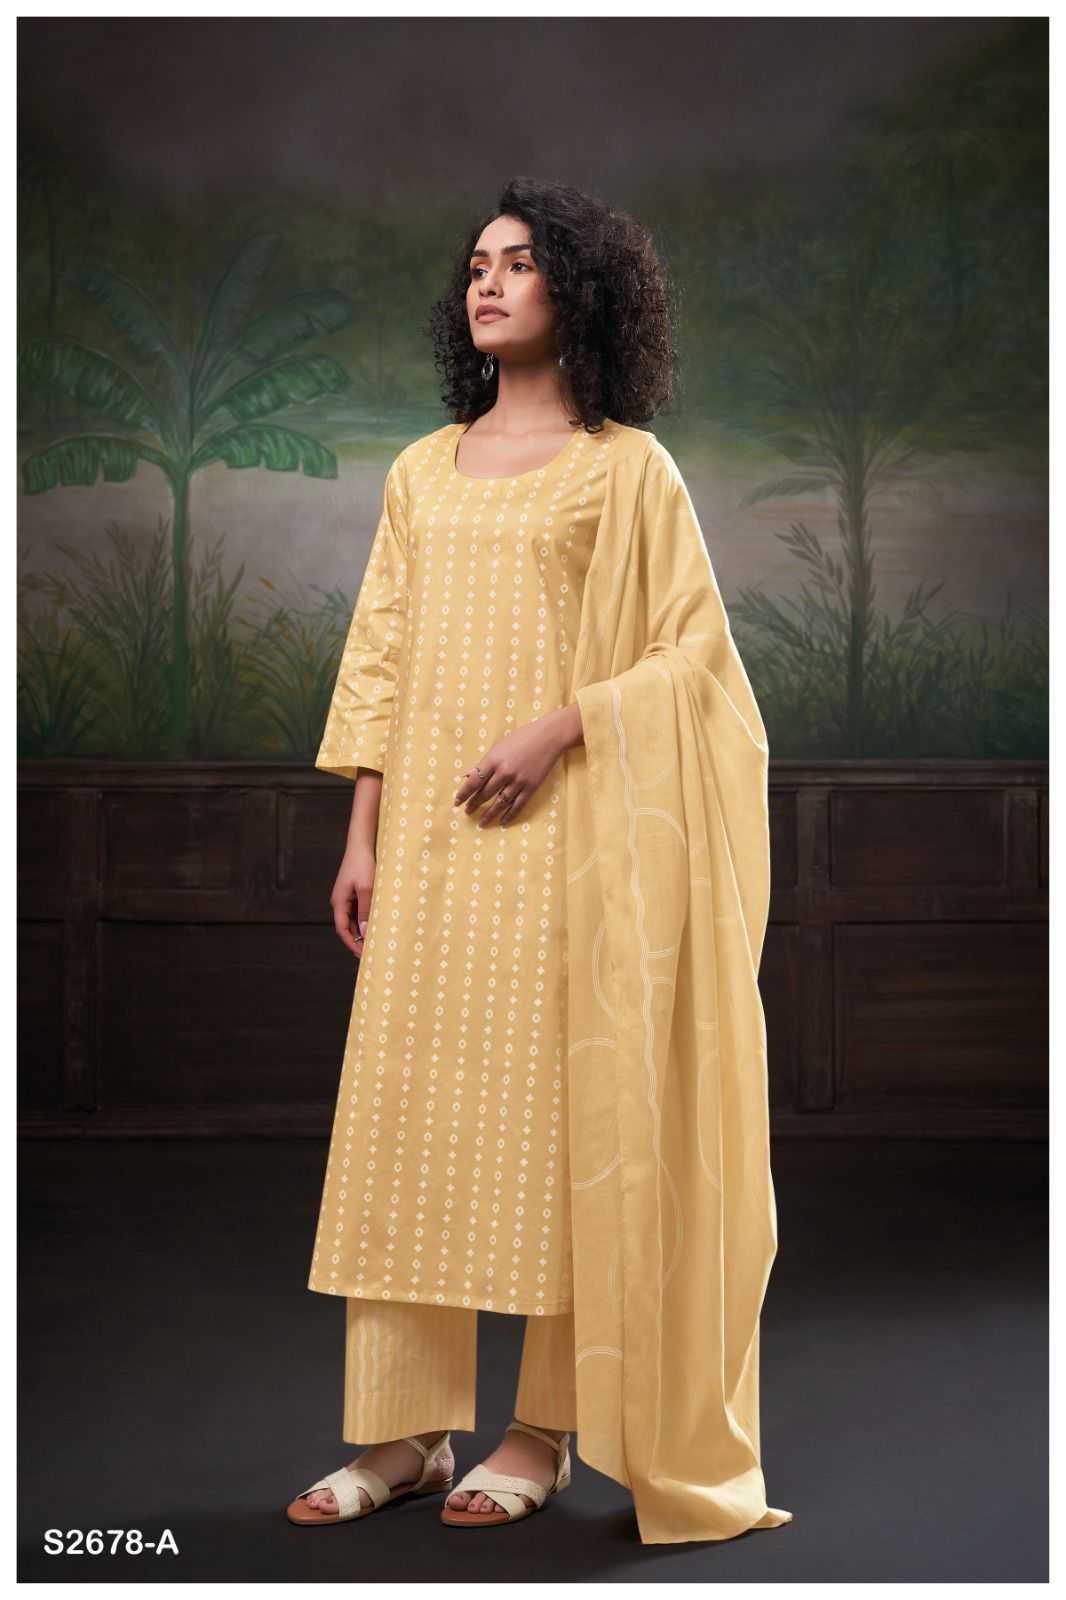 Ganga SHIVIKA 2678 Dress Materials Wholesale catalog